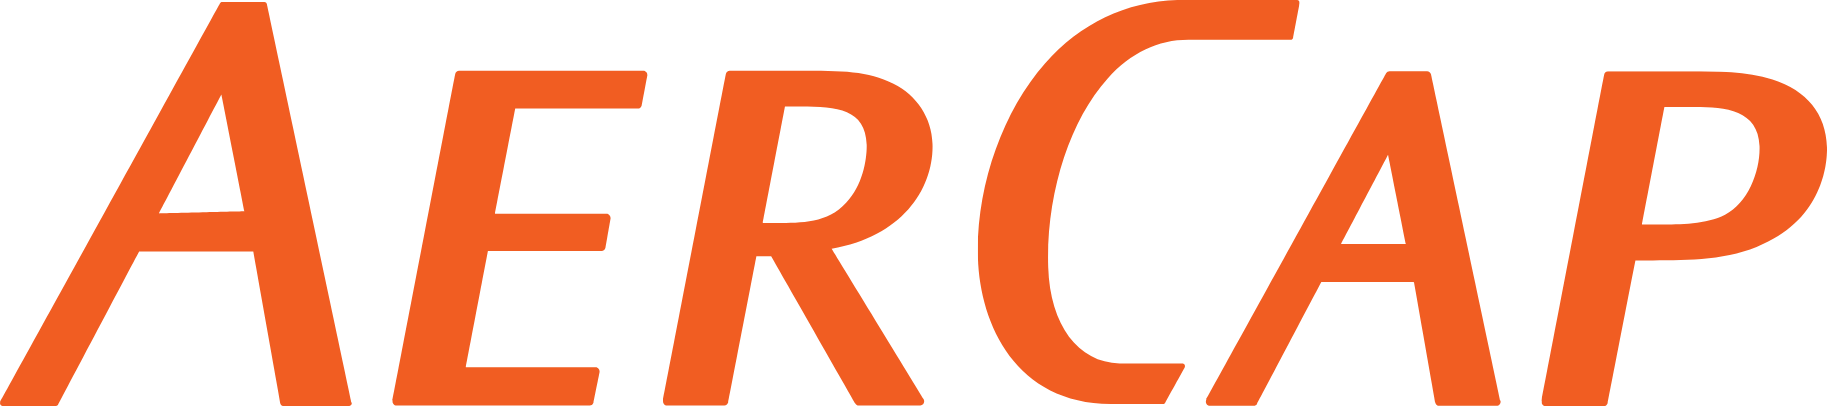 AerCap logo large (transparent PNG)